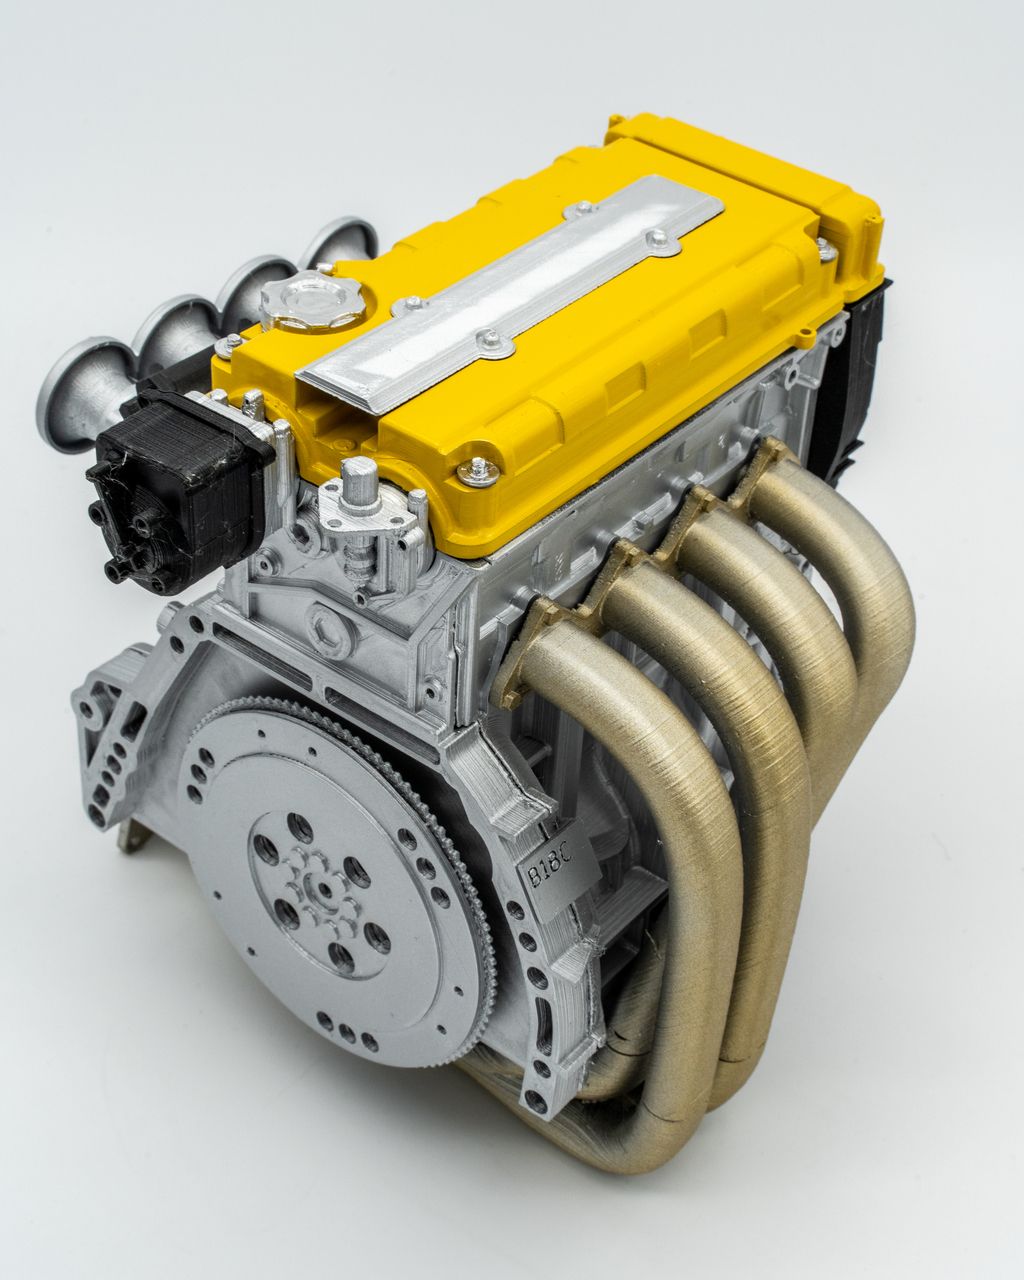 1/4 B-Series (B16/B18) SPOON Scale Engine – Assembled